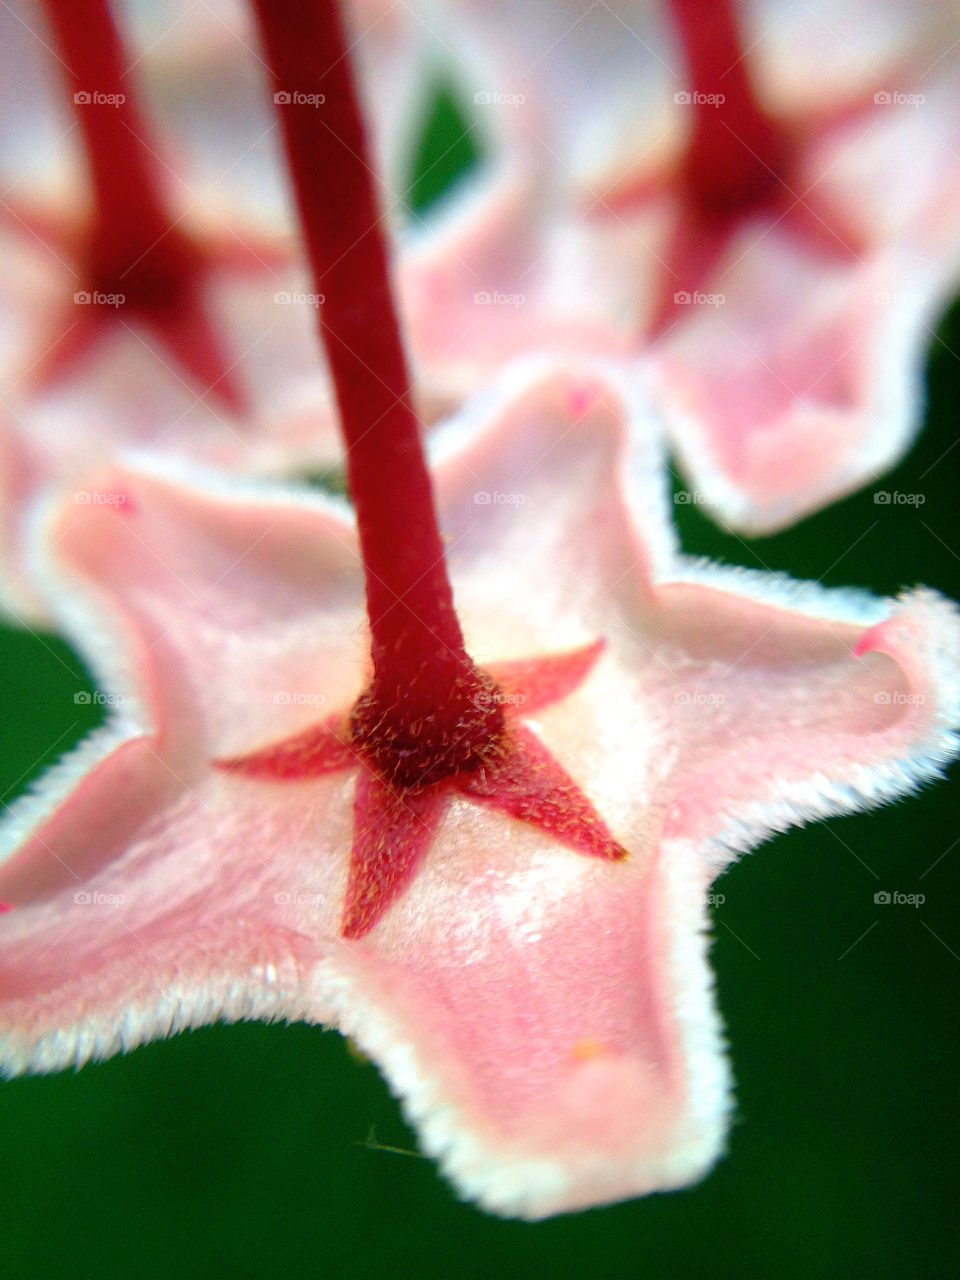 sweden flower plant petals by elluca